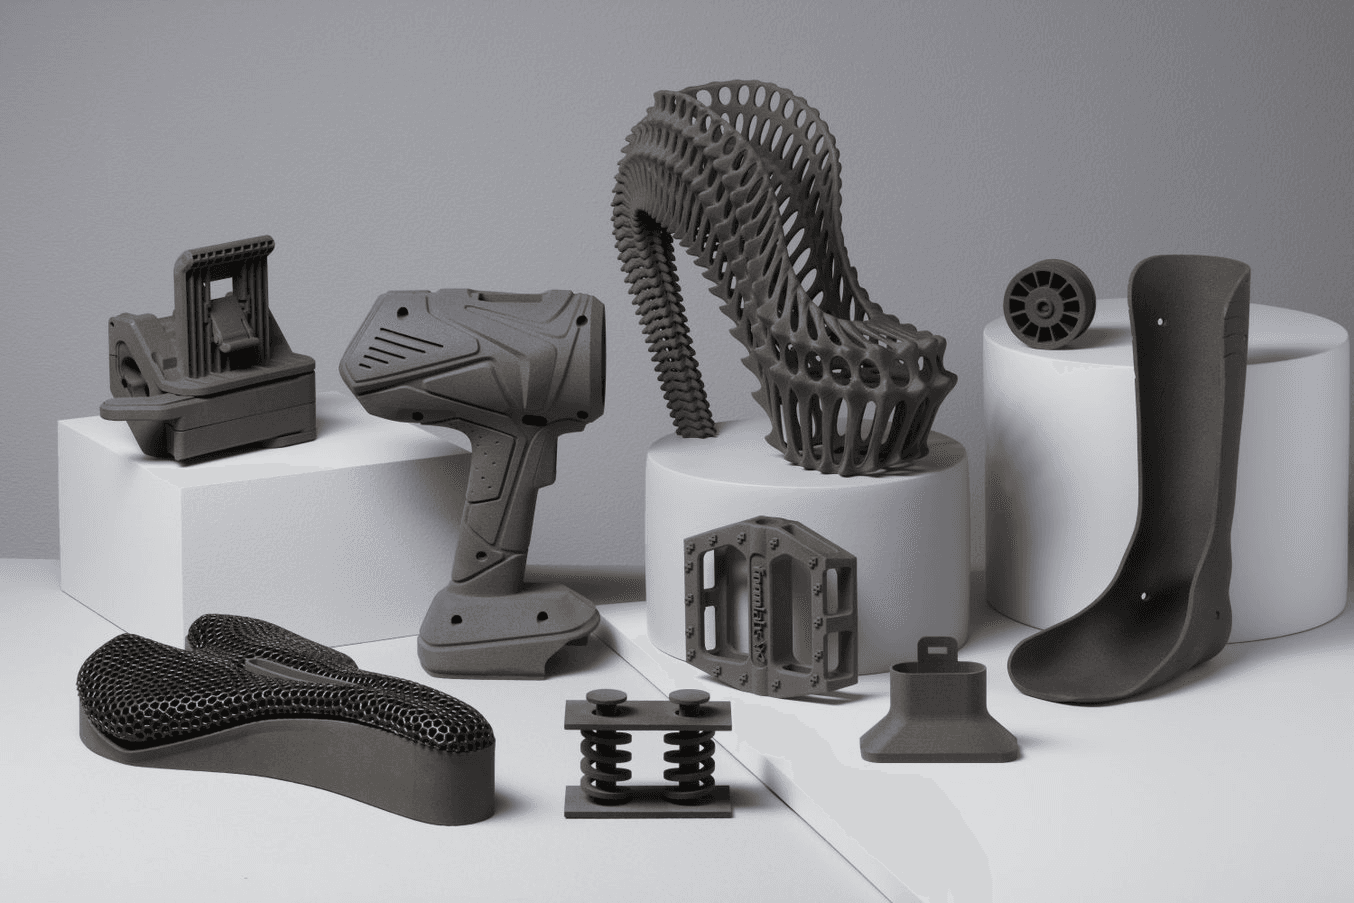 SLS 3D printed prototypes